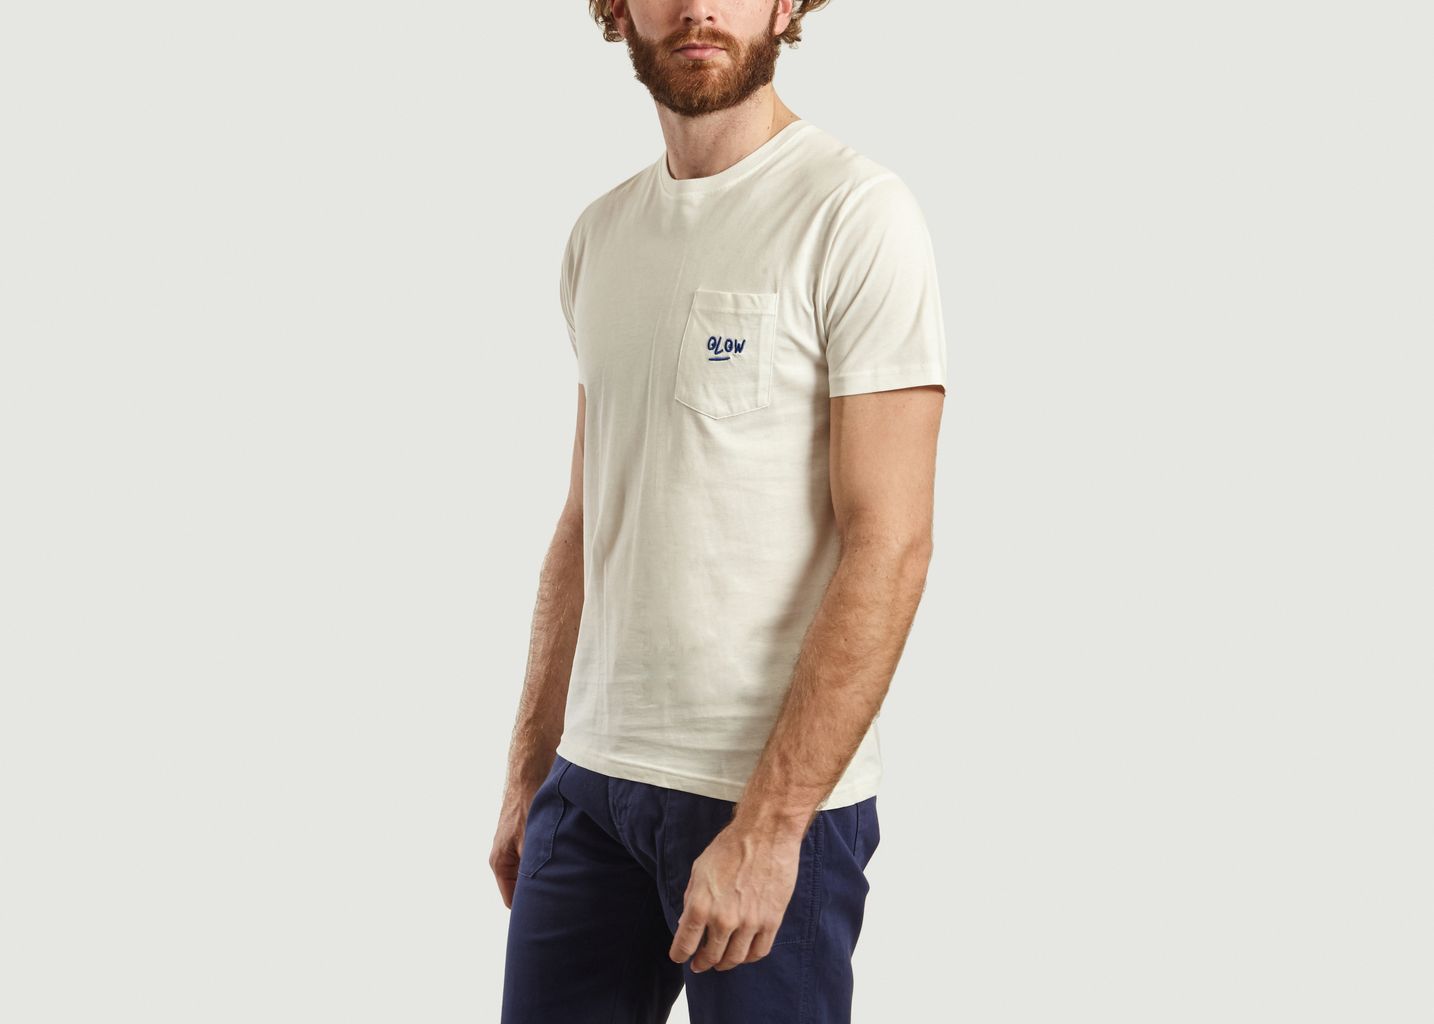 Organic Cotton Alex T-Shirt - Olow